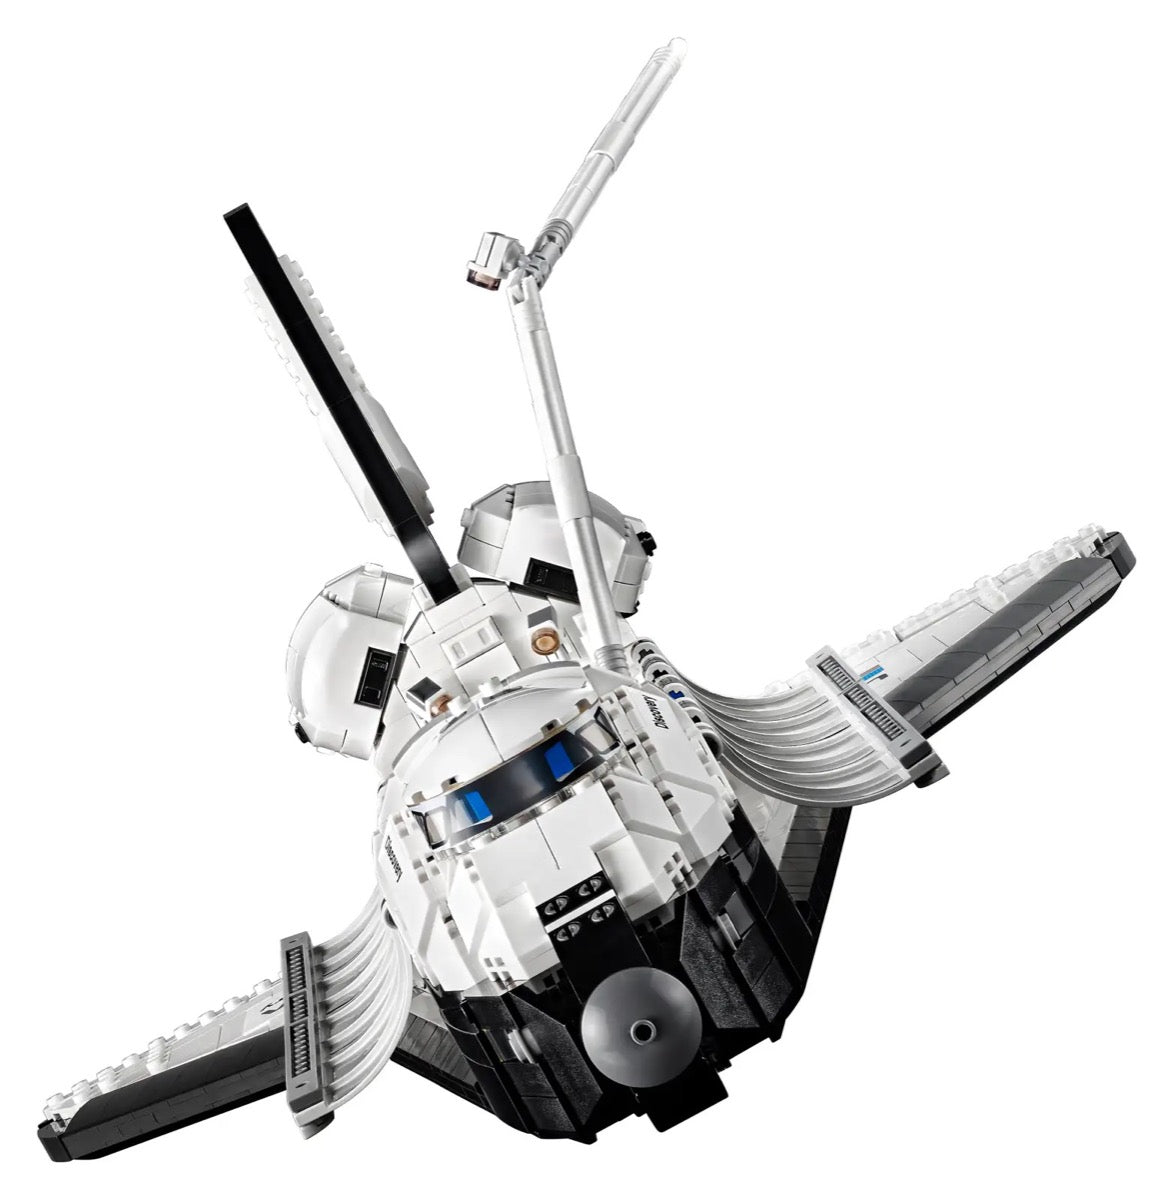 Lego 10283 creator expert nasa space shuttle discovery